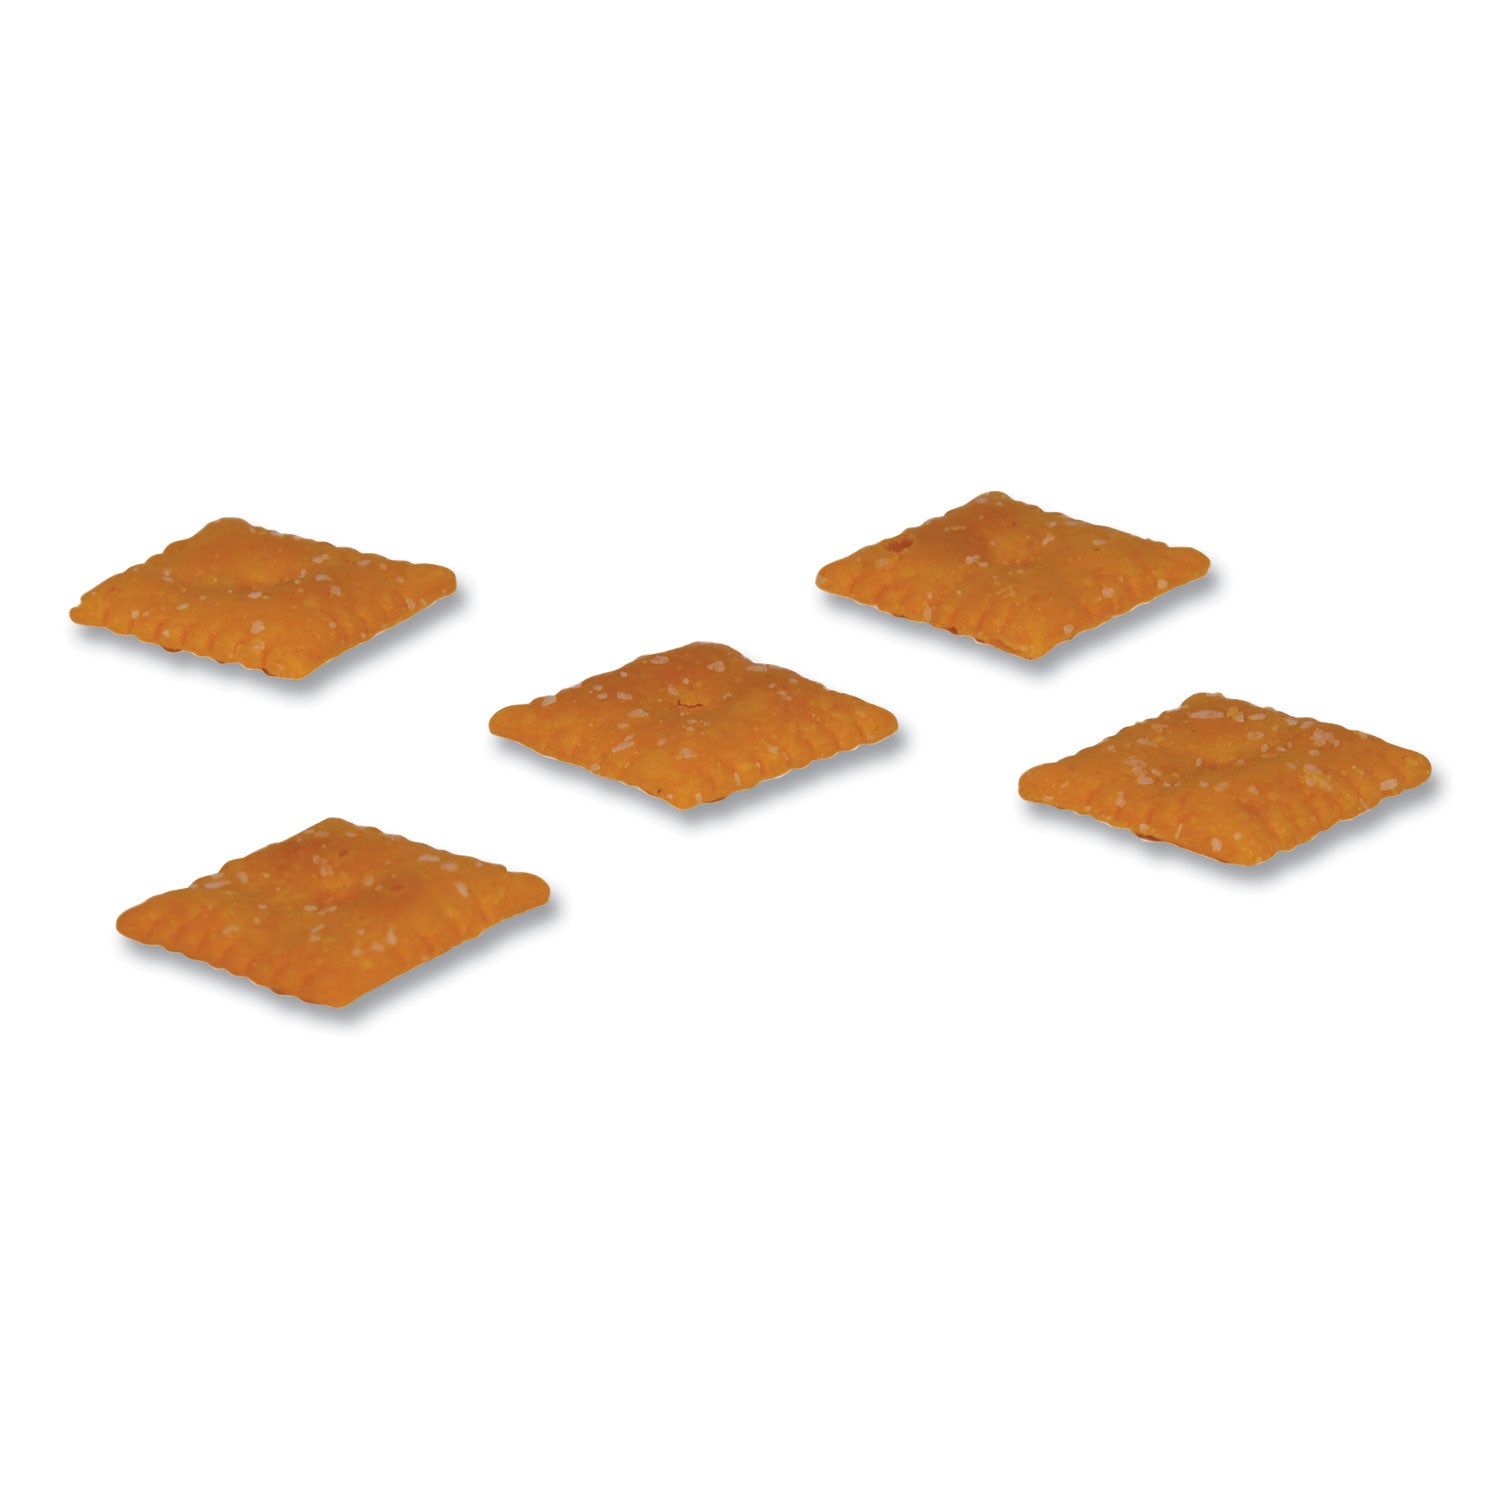 baked-snack-crackers-15-oz-bag-60-carton_kebsub12261 - 4